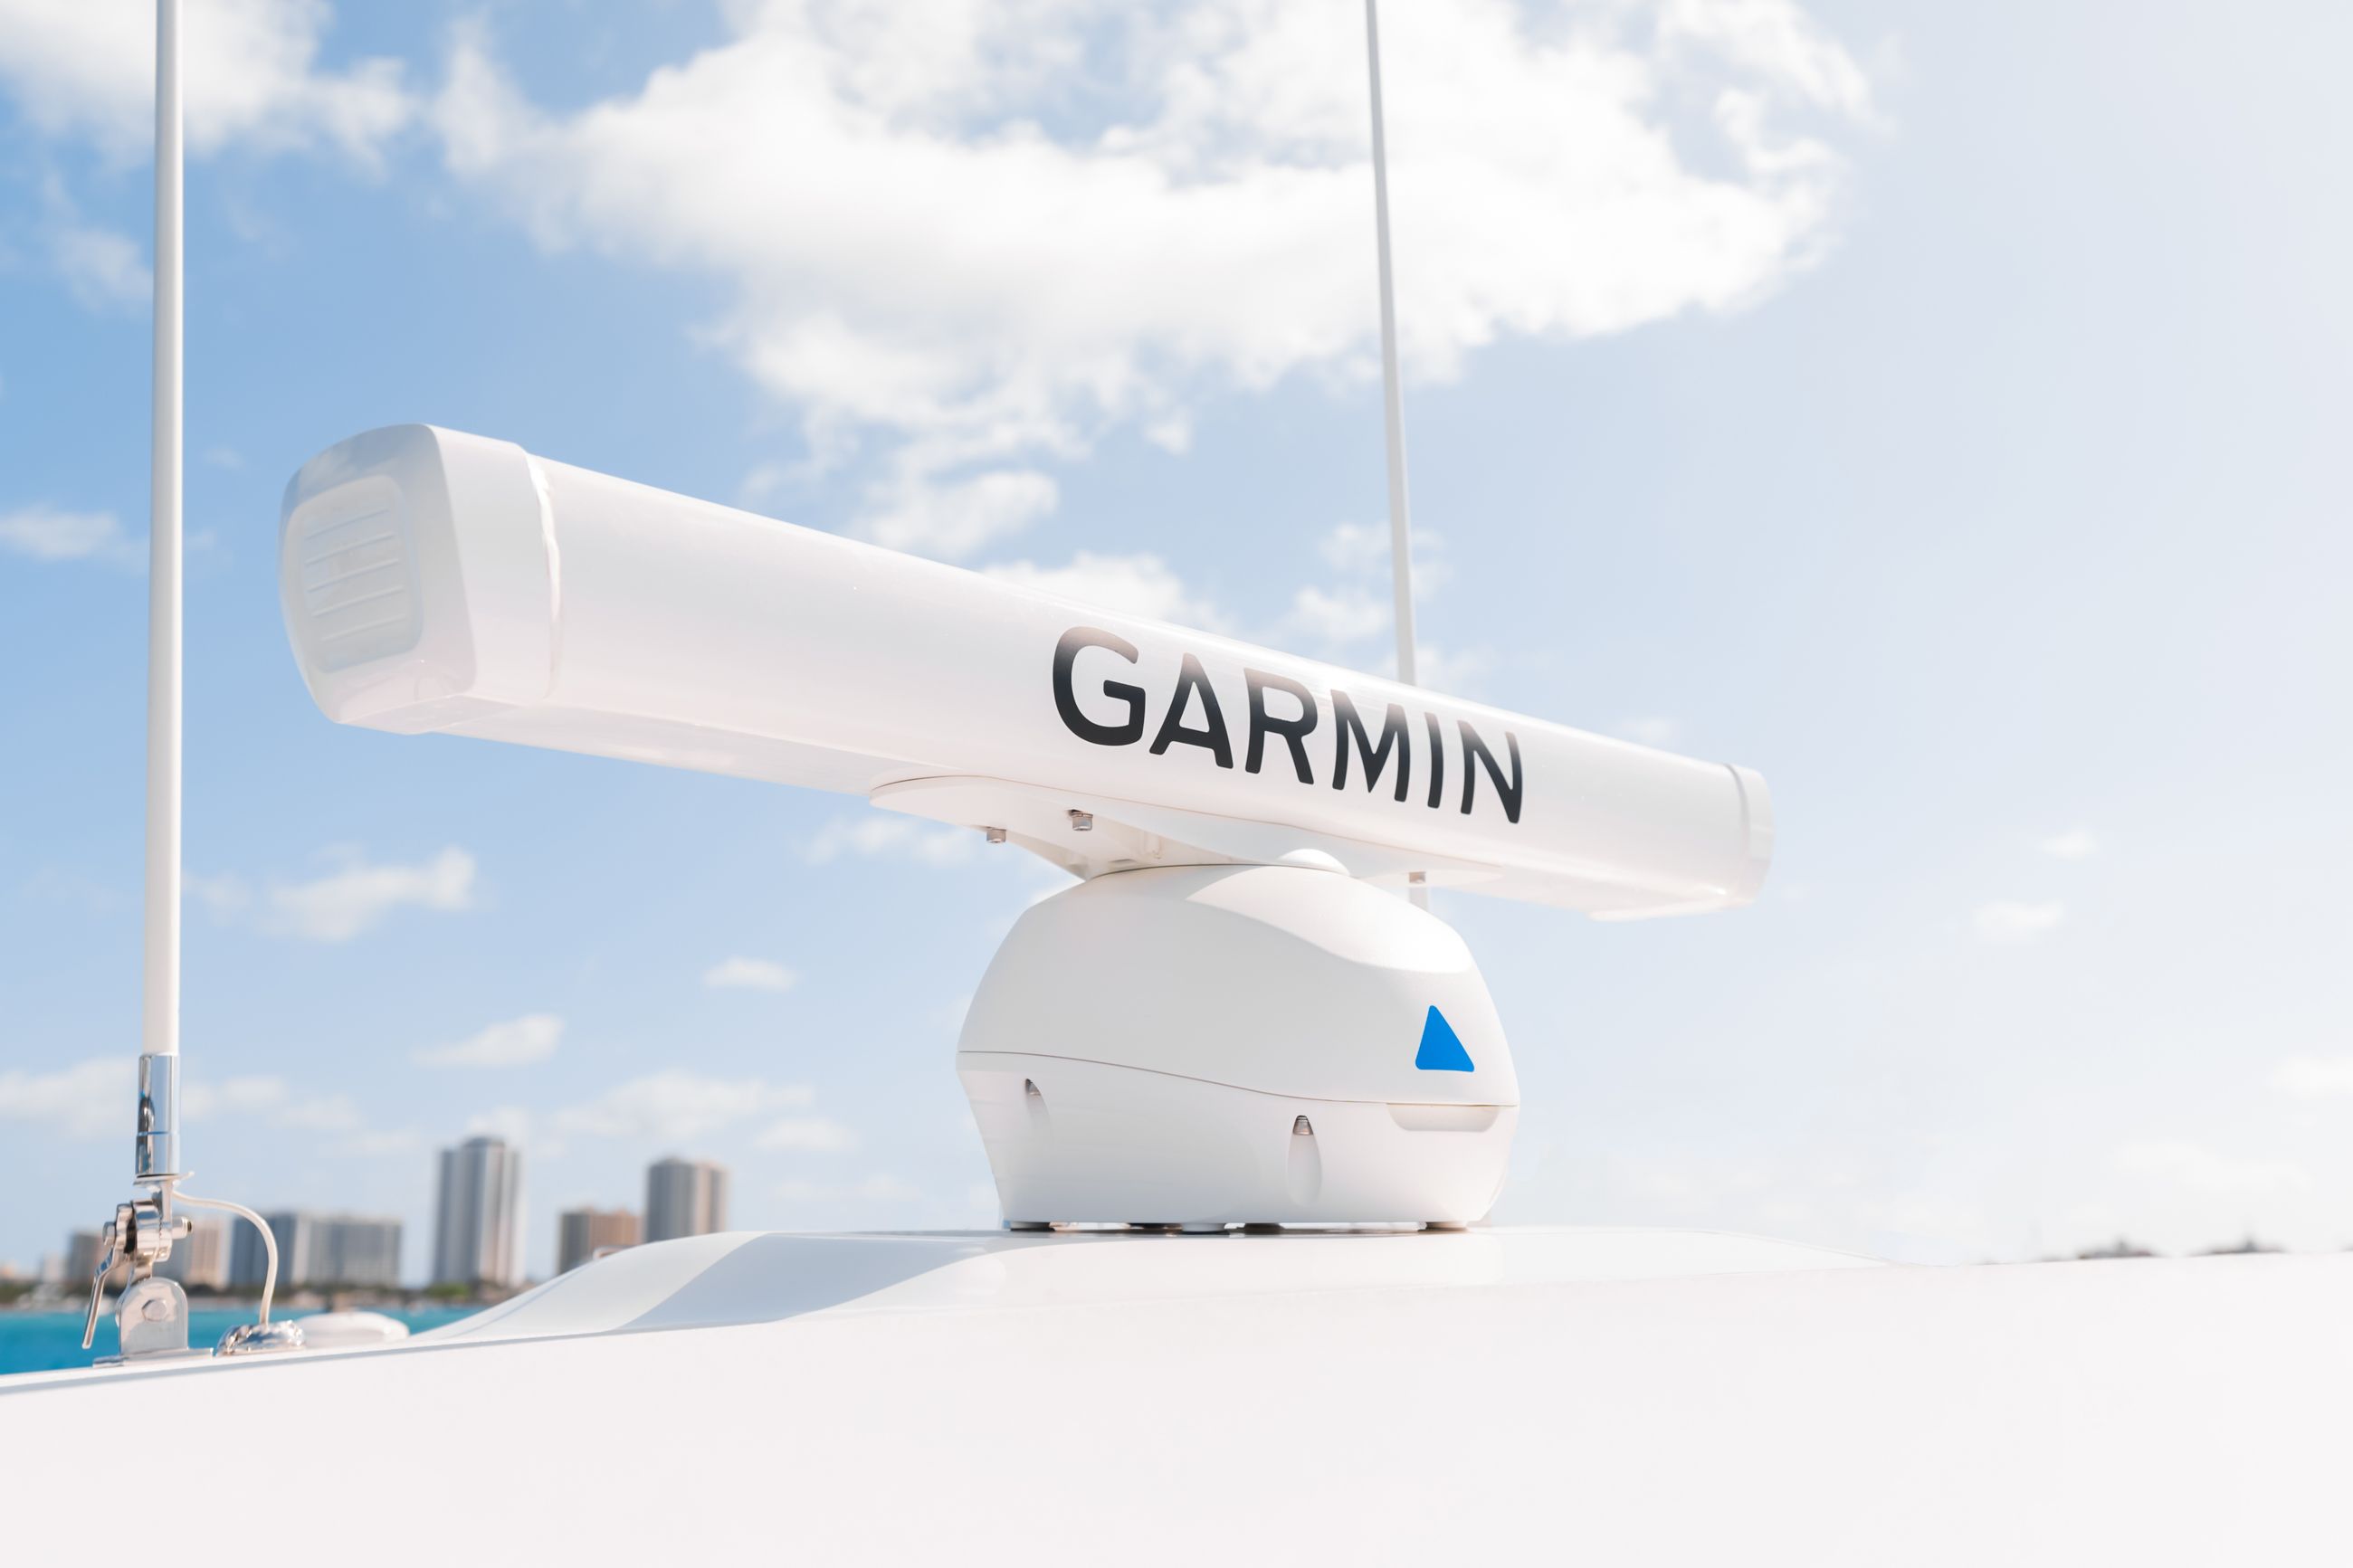 Large detail image of the Garmin Fantom 124 Radar